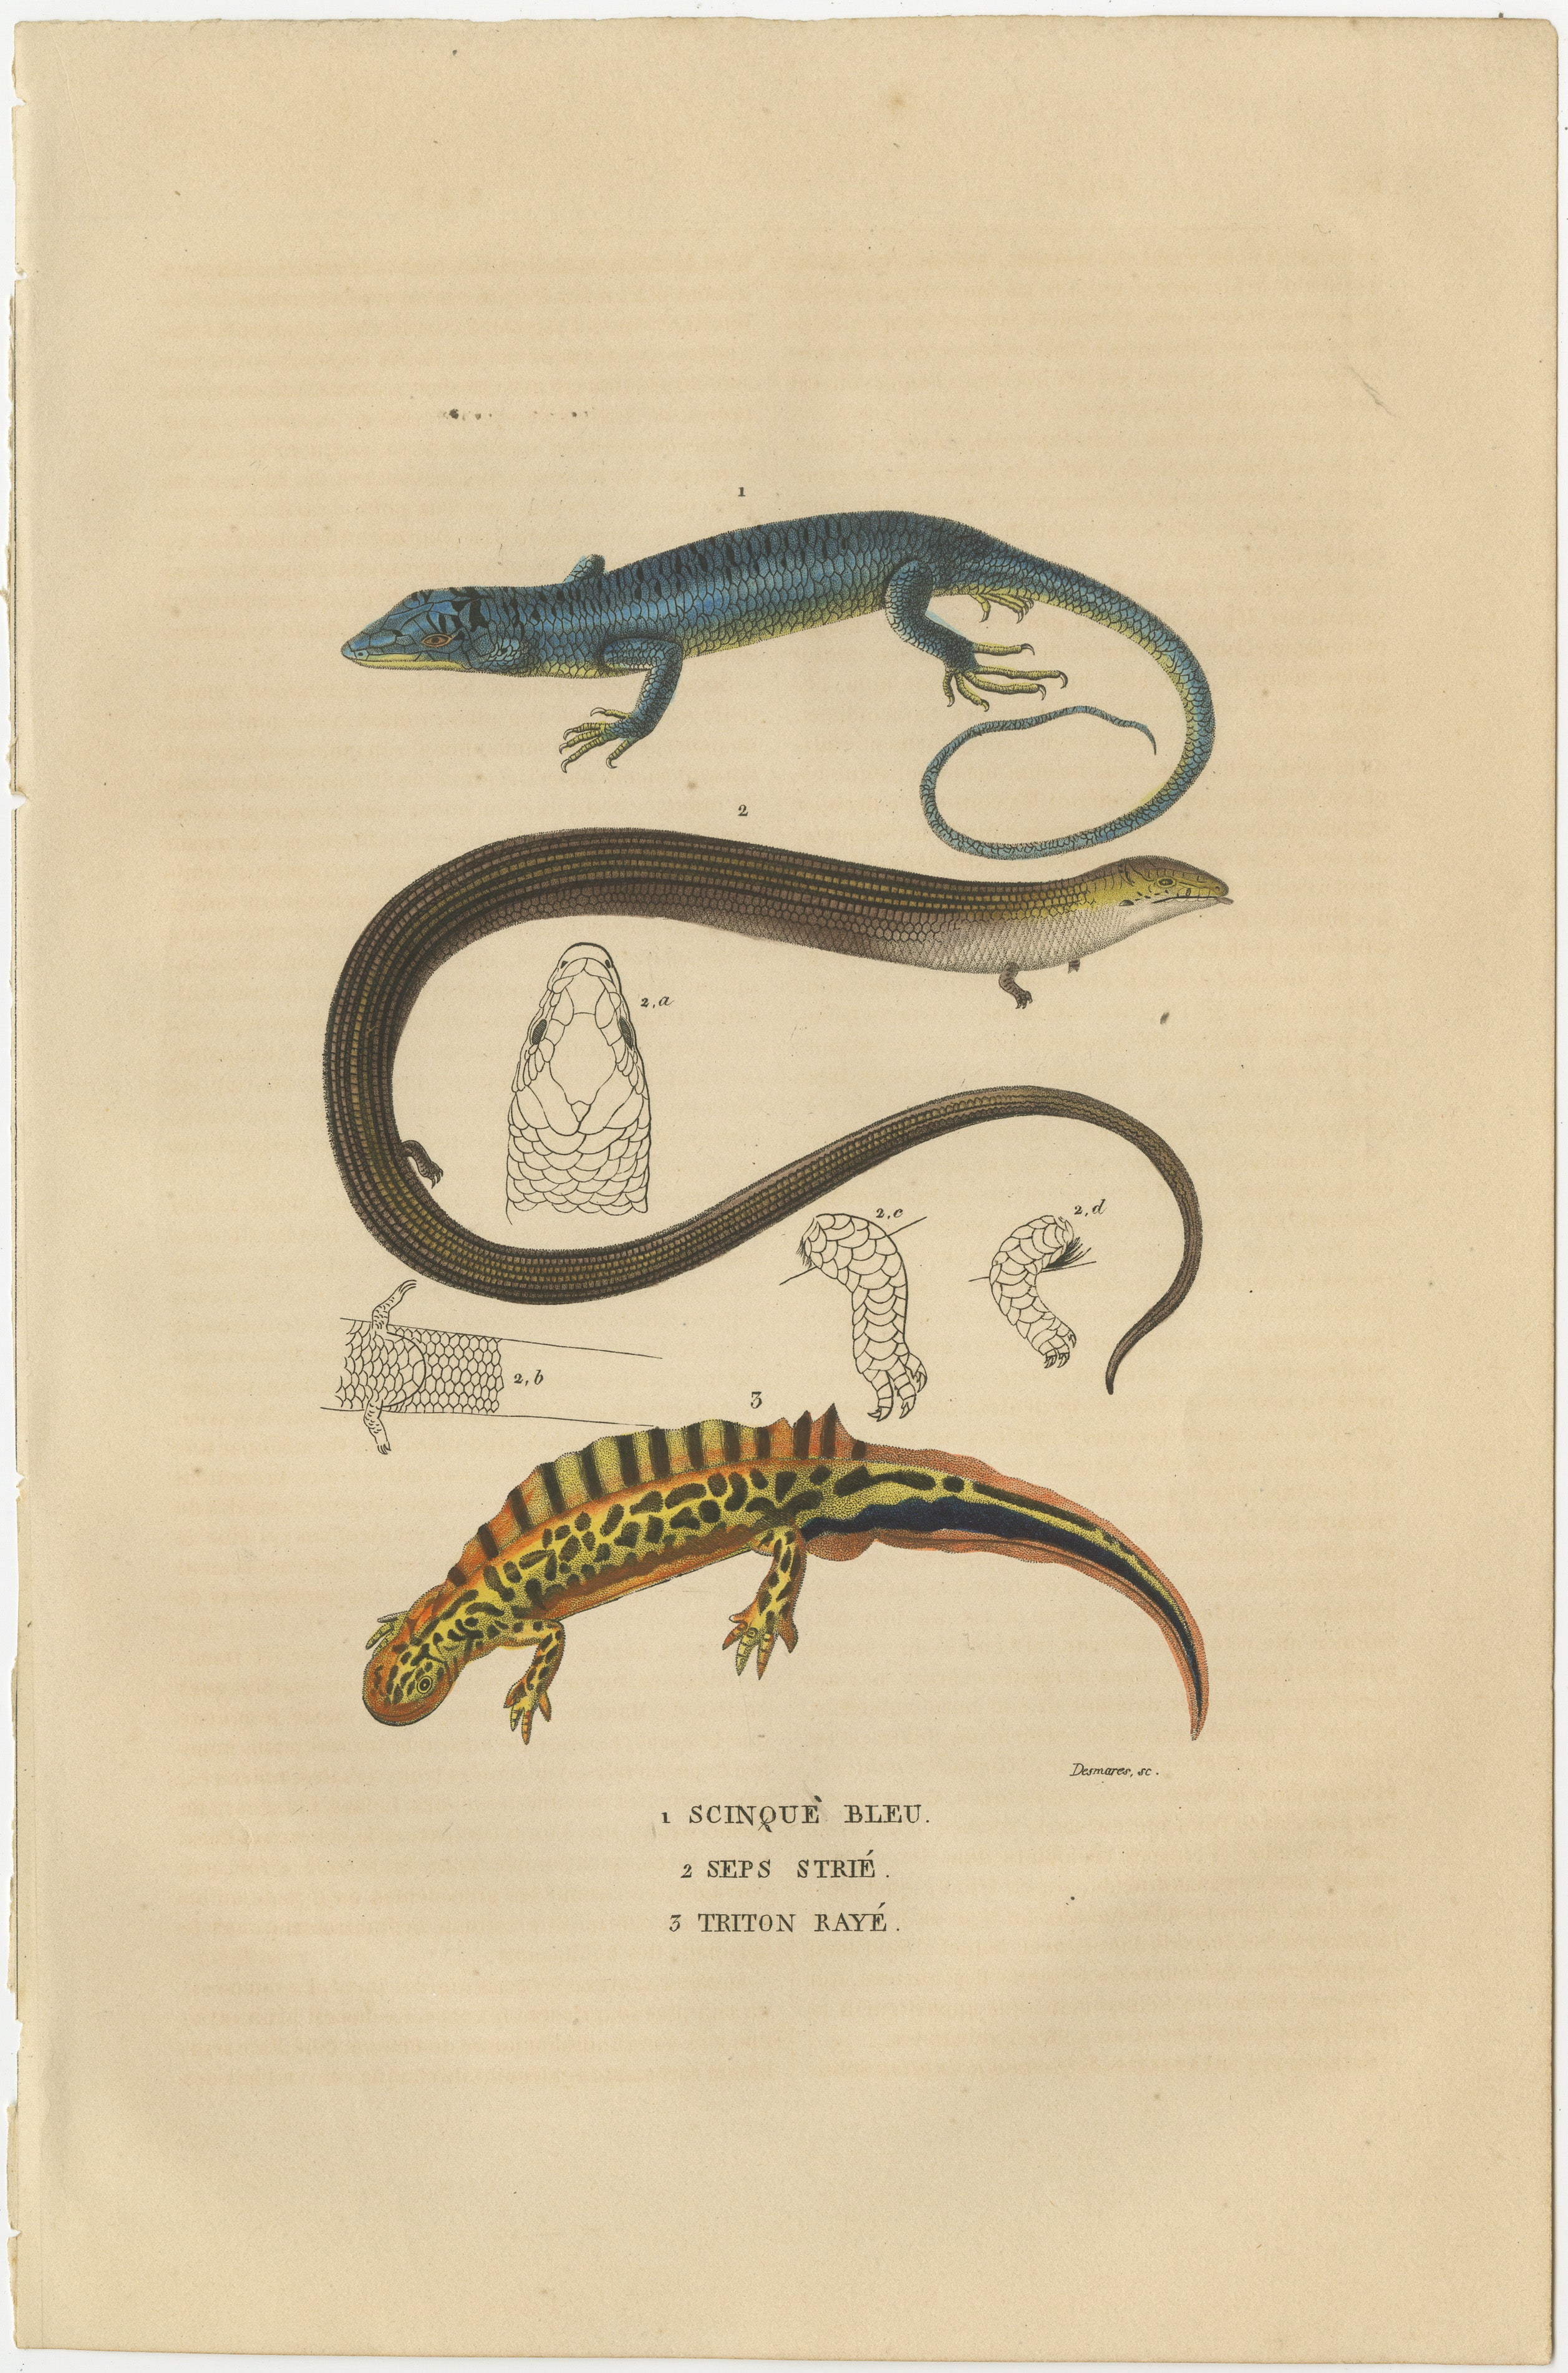 Original beautiful hand-colored print of Lizards. 

